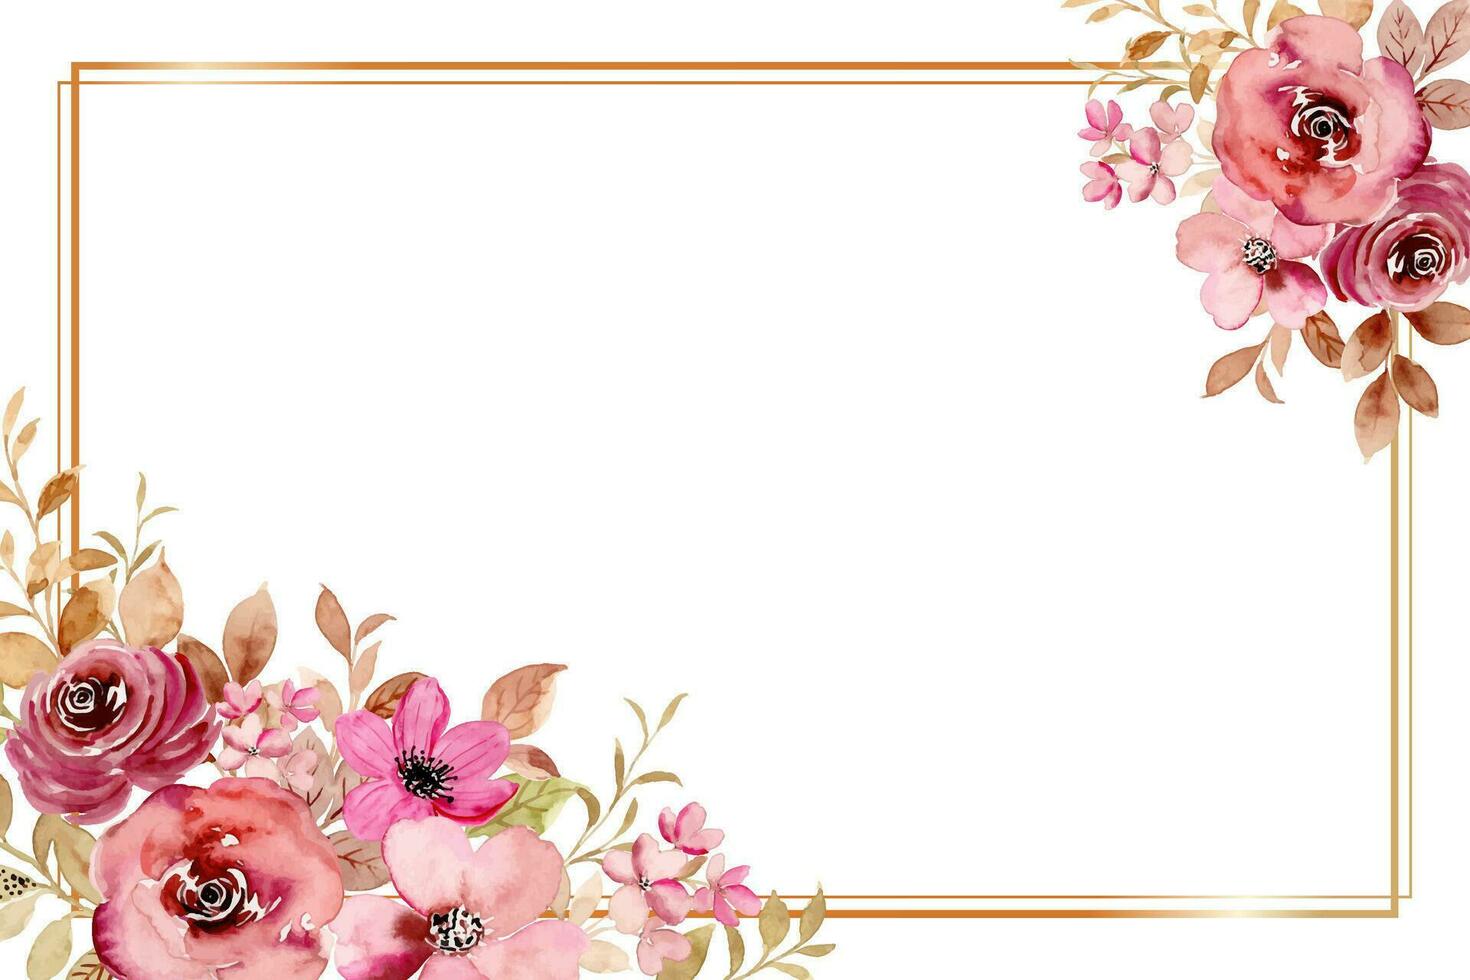 Burgundy rose flower frame for wedding, birthday, card, background, invitation, wallpaper, sticker, decoration etc. vector